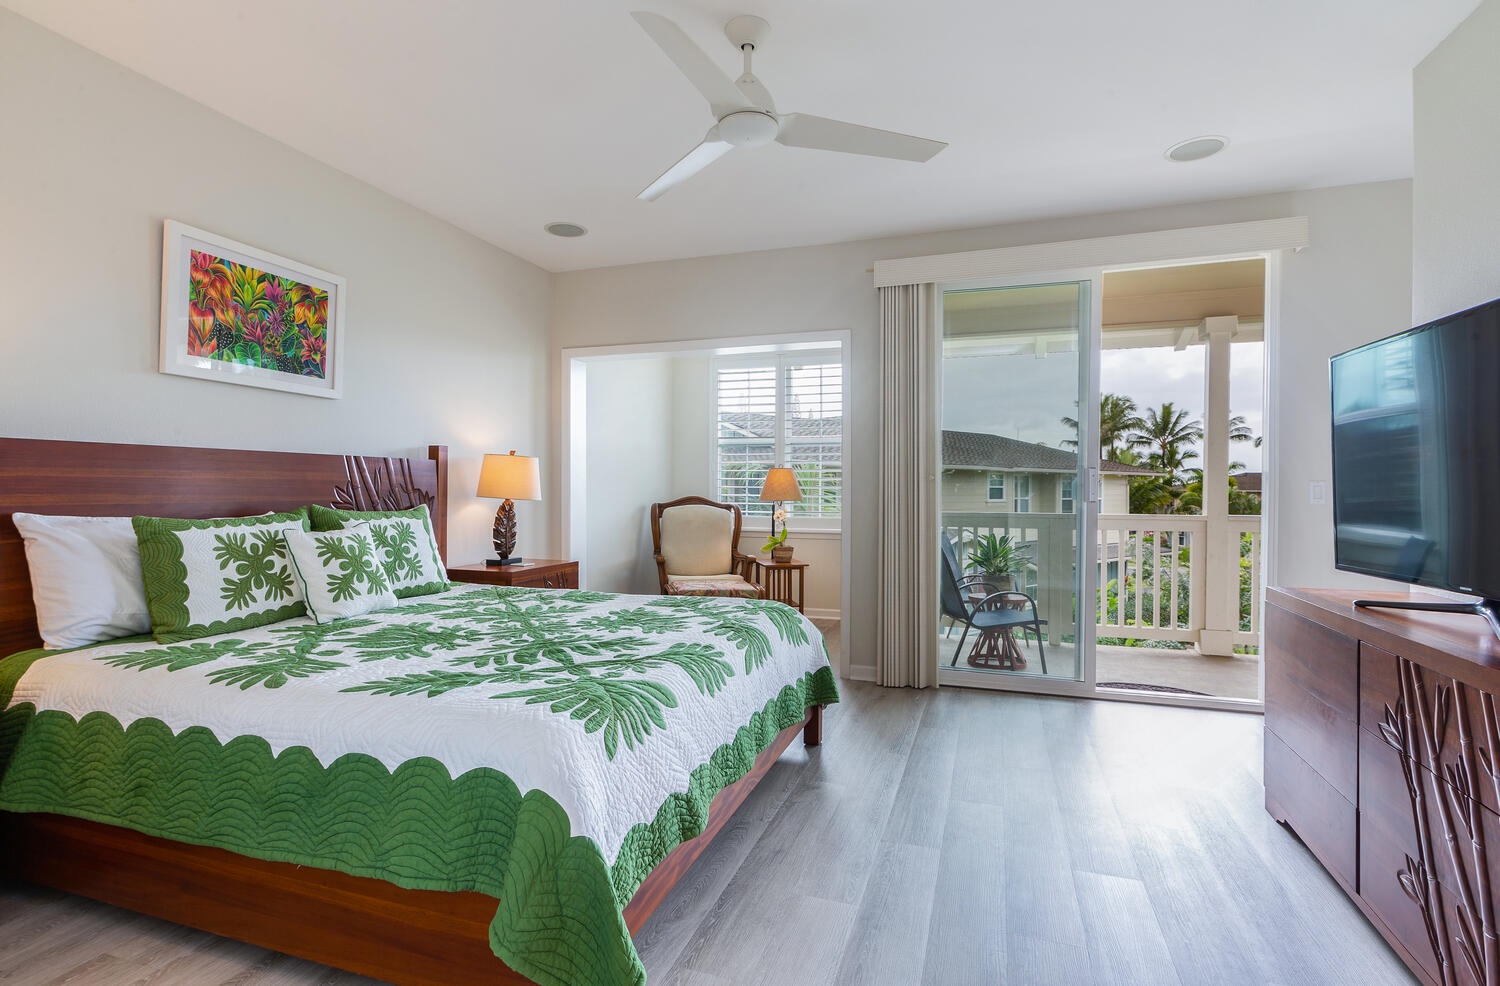 Princeville Vacation Rentals, Leilani Villa - Primary bedroom with king bed